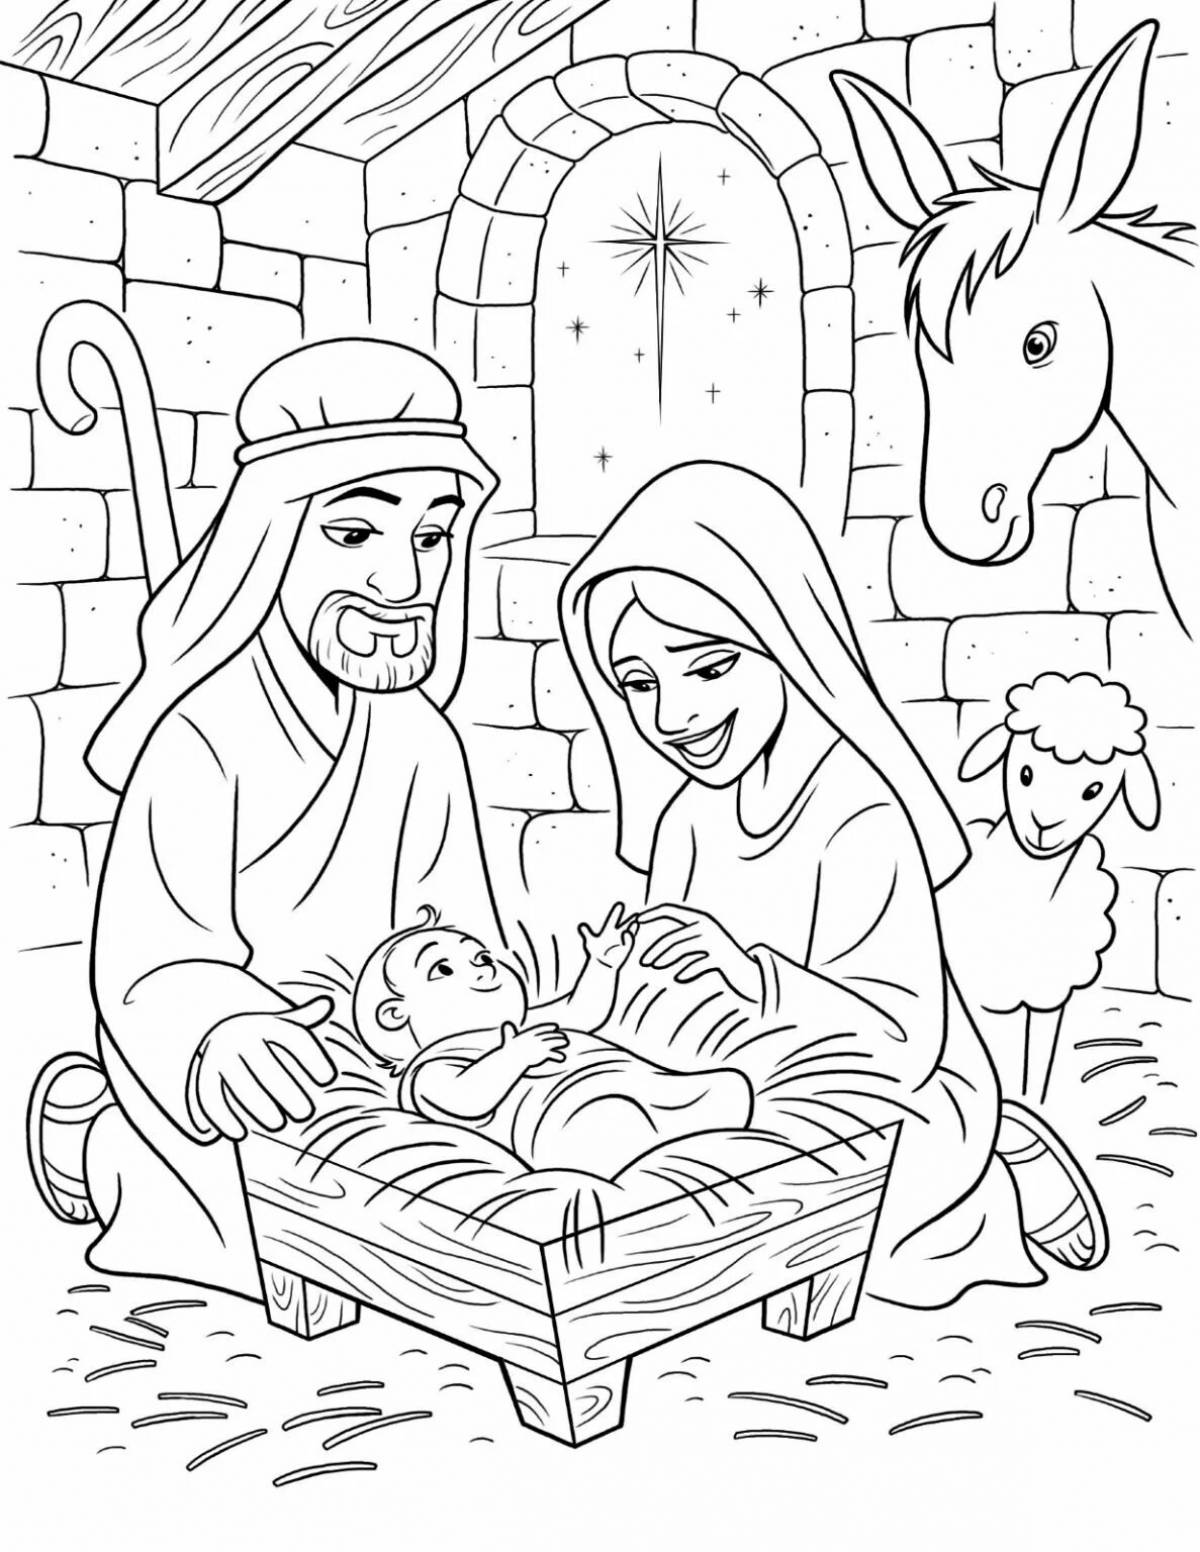 Birth of christ #8